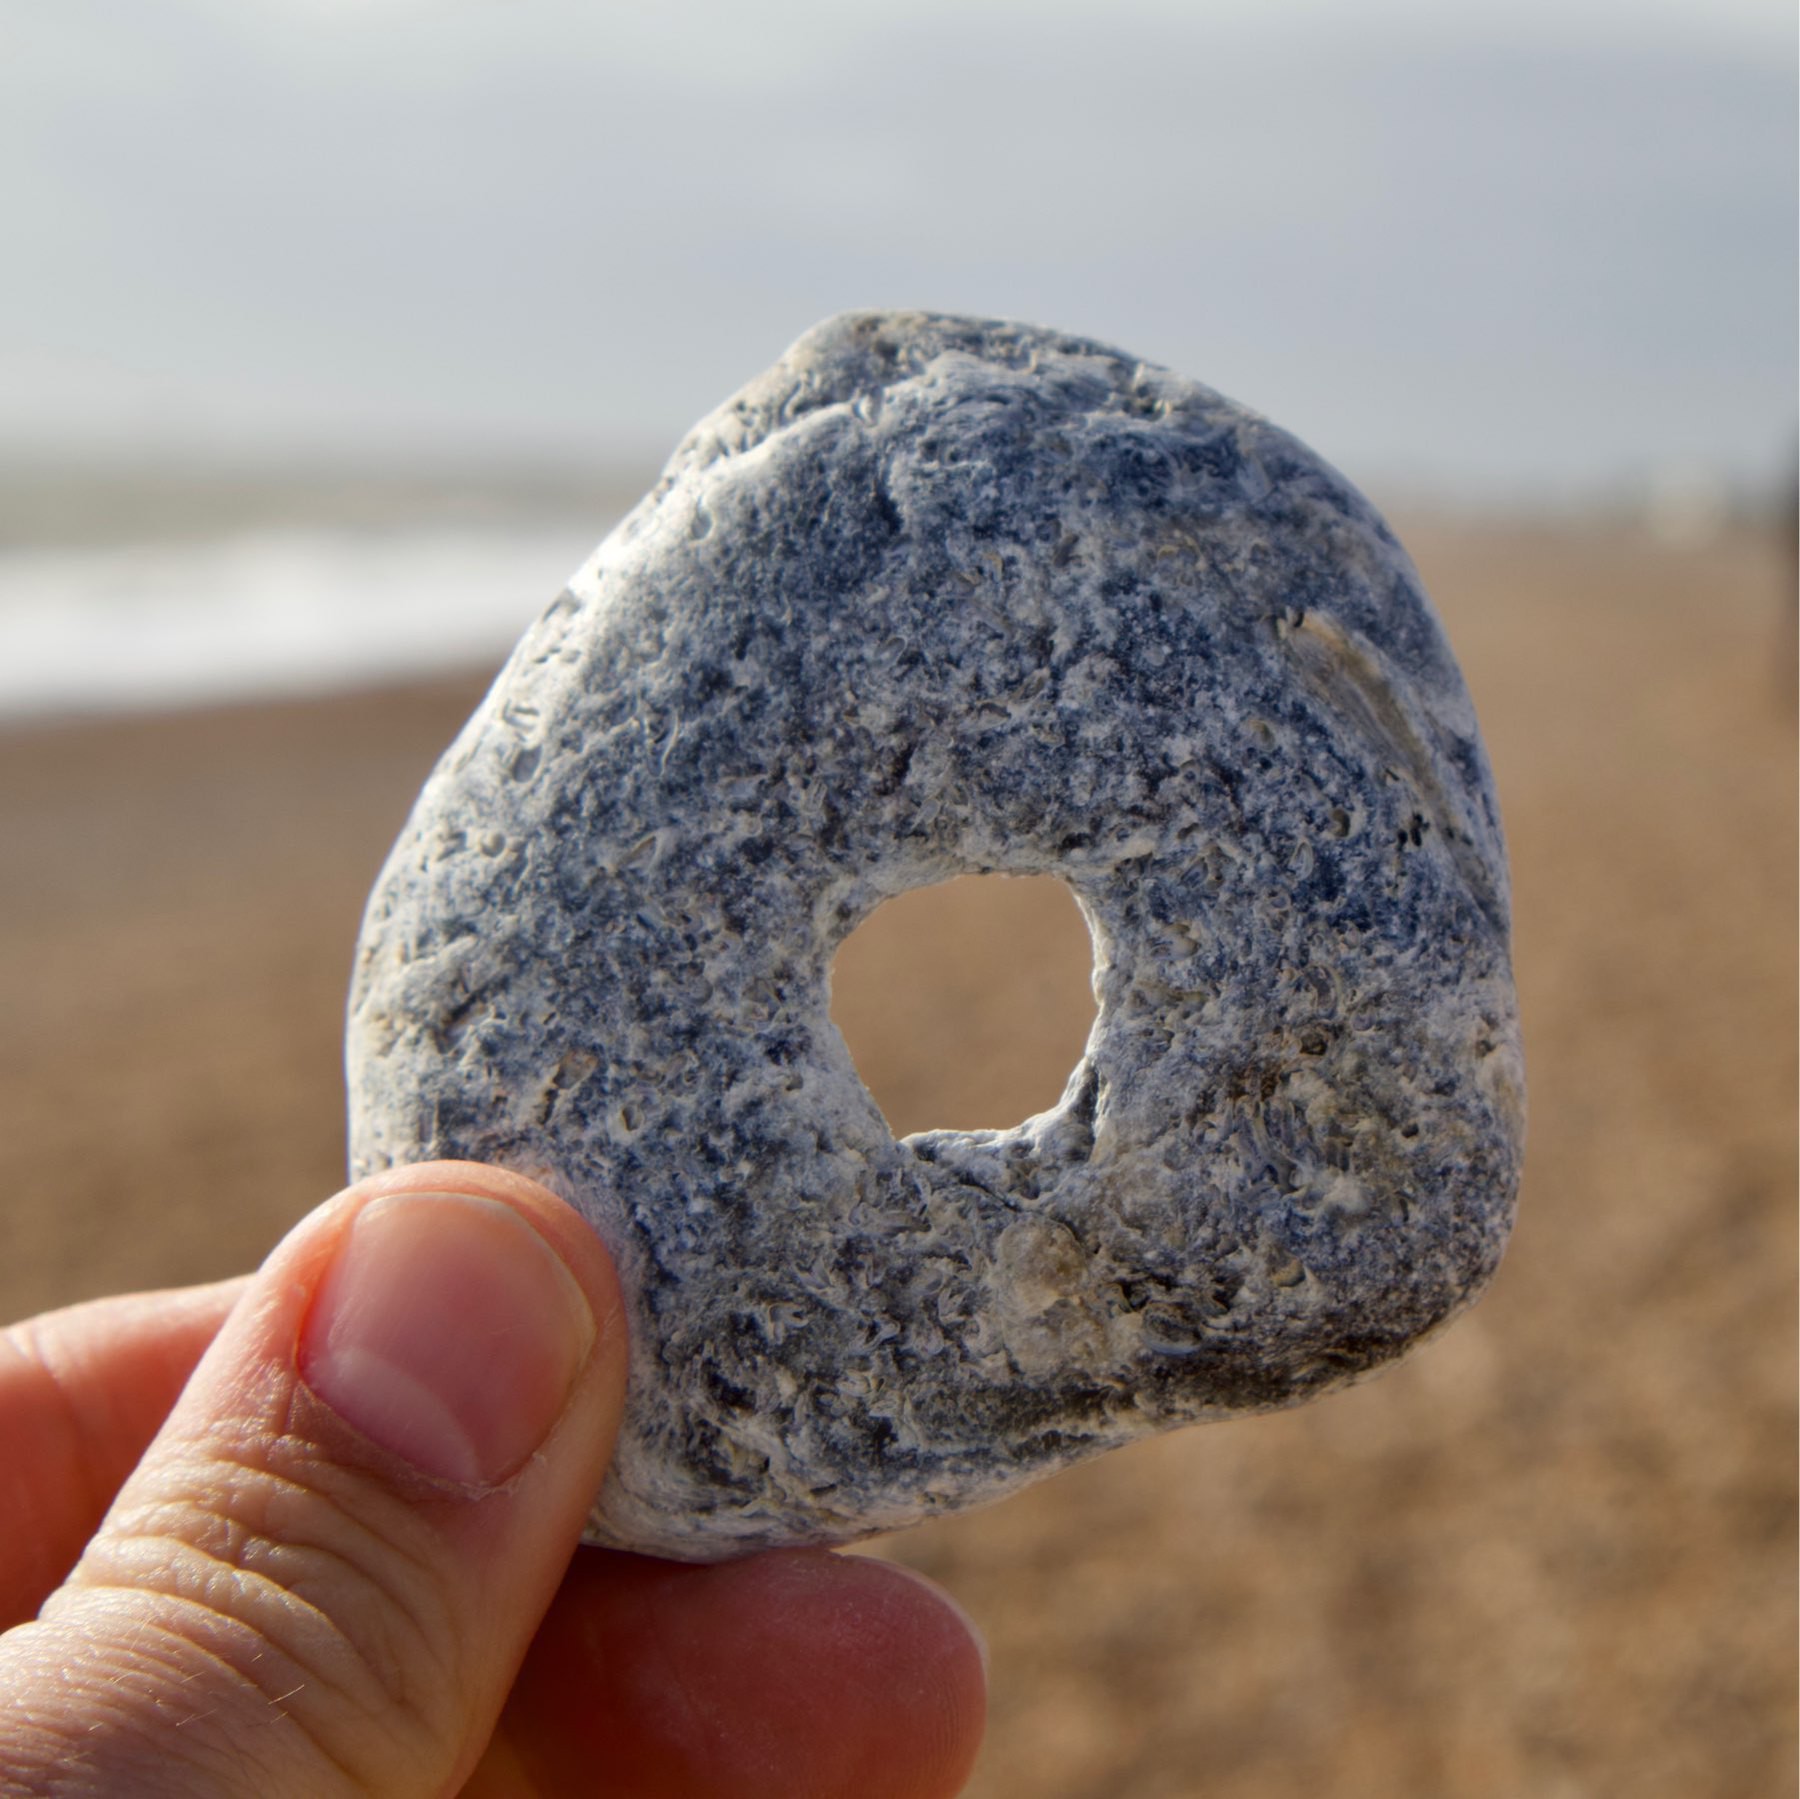 Another hagstone found on Shoreham Beach